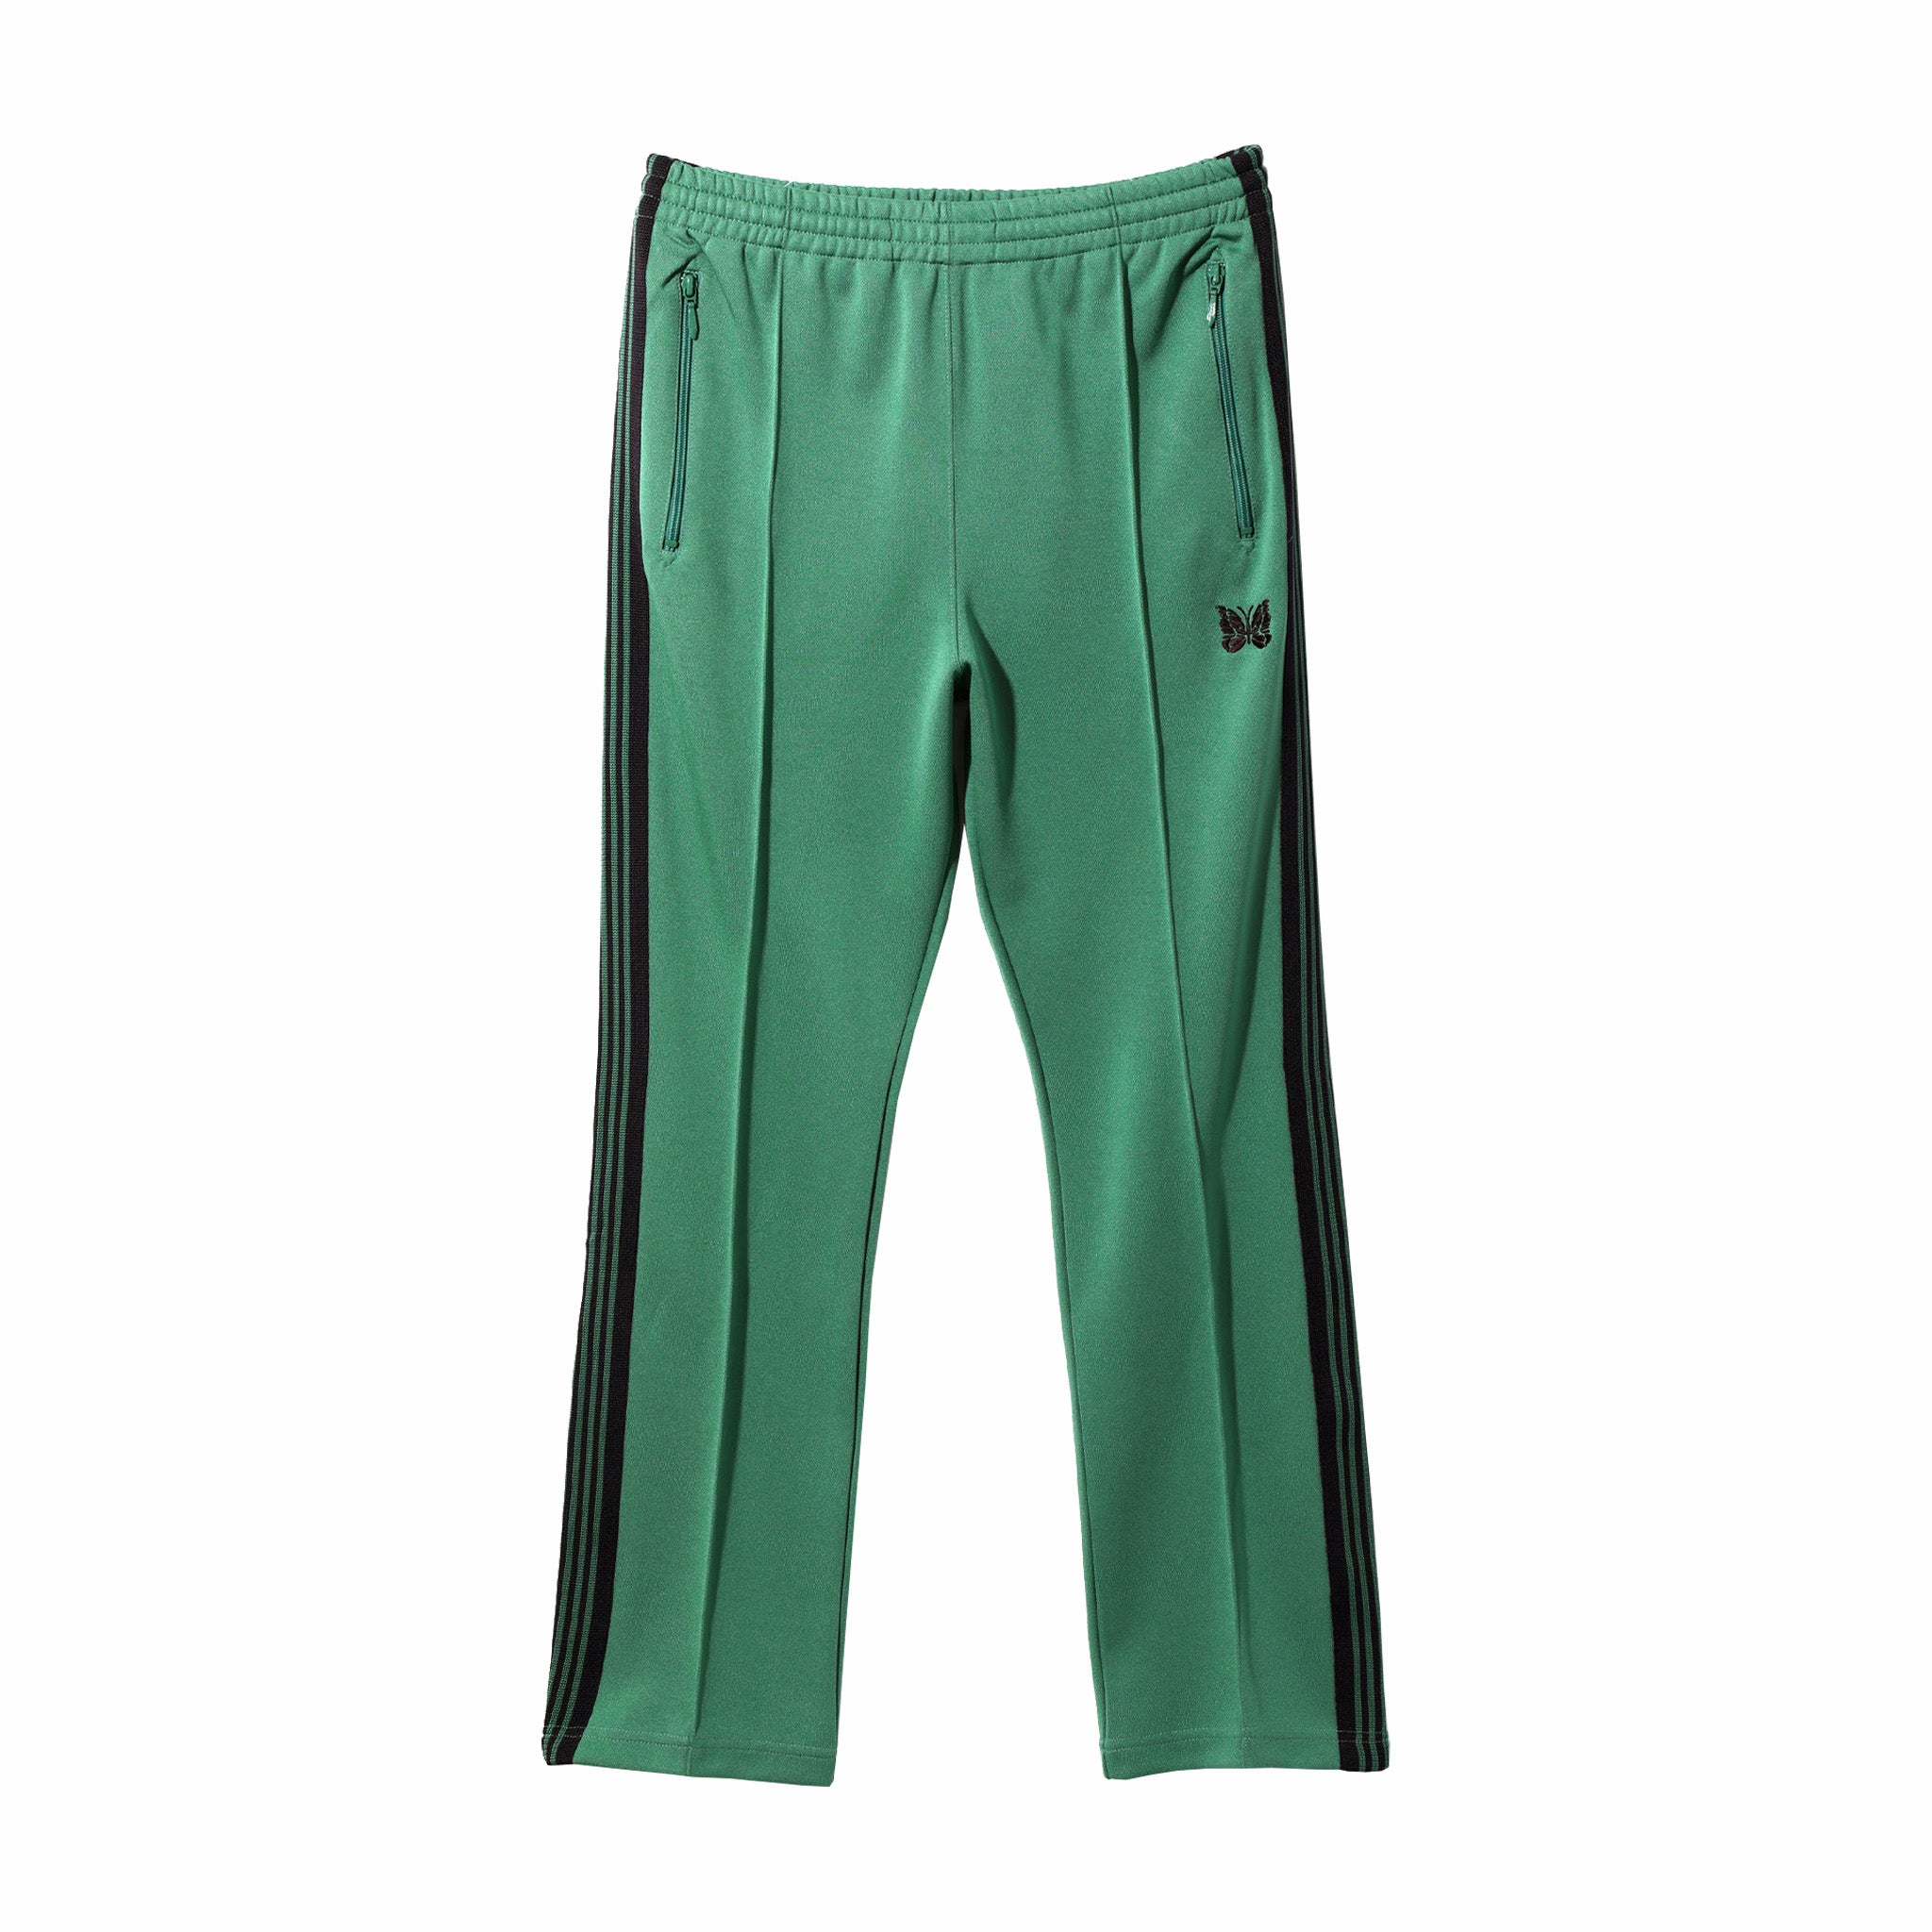 Aghi, Pantaloni da corsa Needles - Poli liscio (Smeraldo)